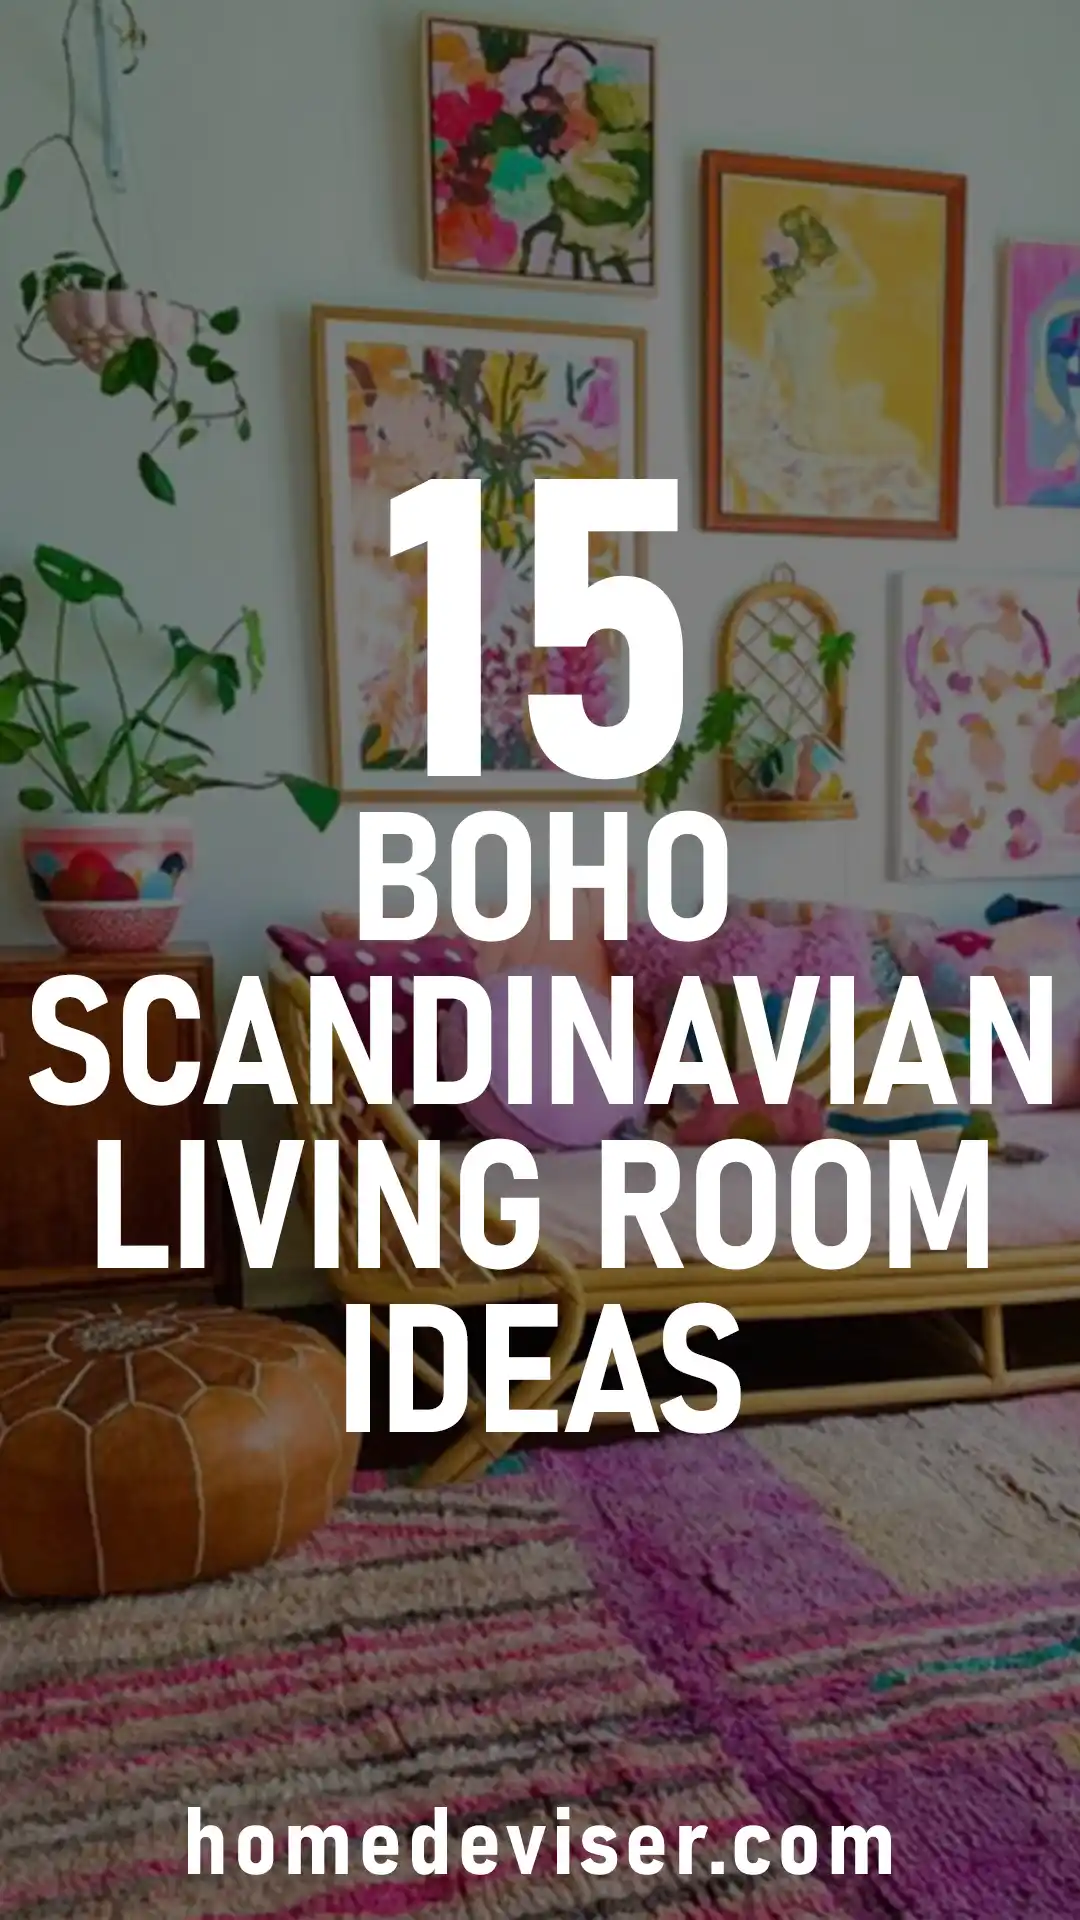 Boho Scandinavian Living Room Ideas